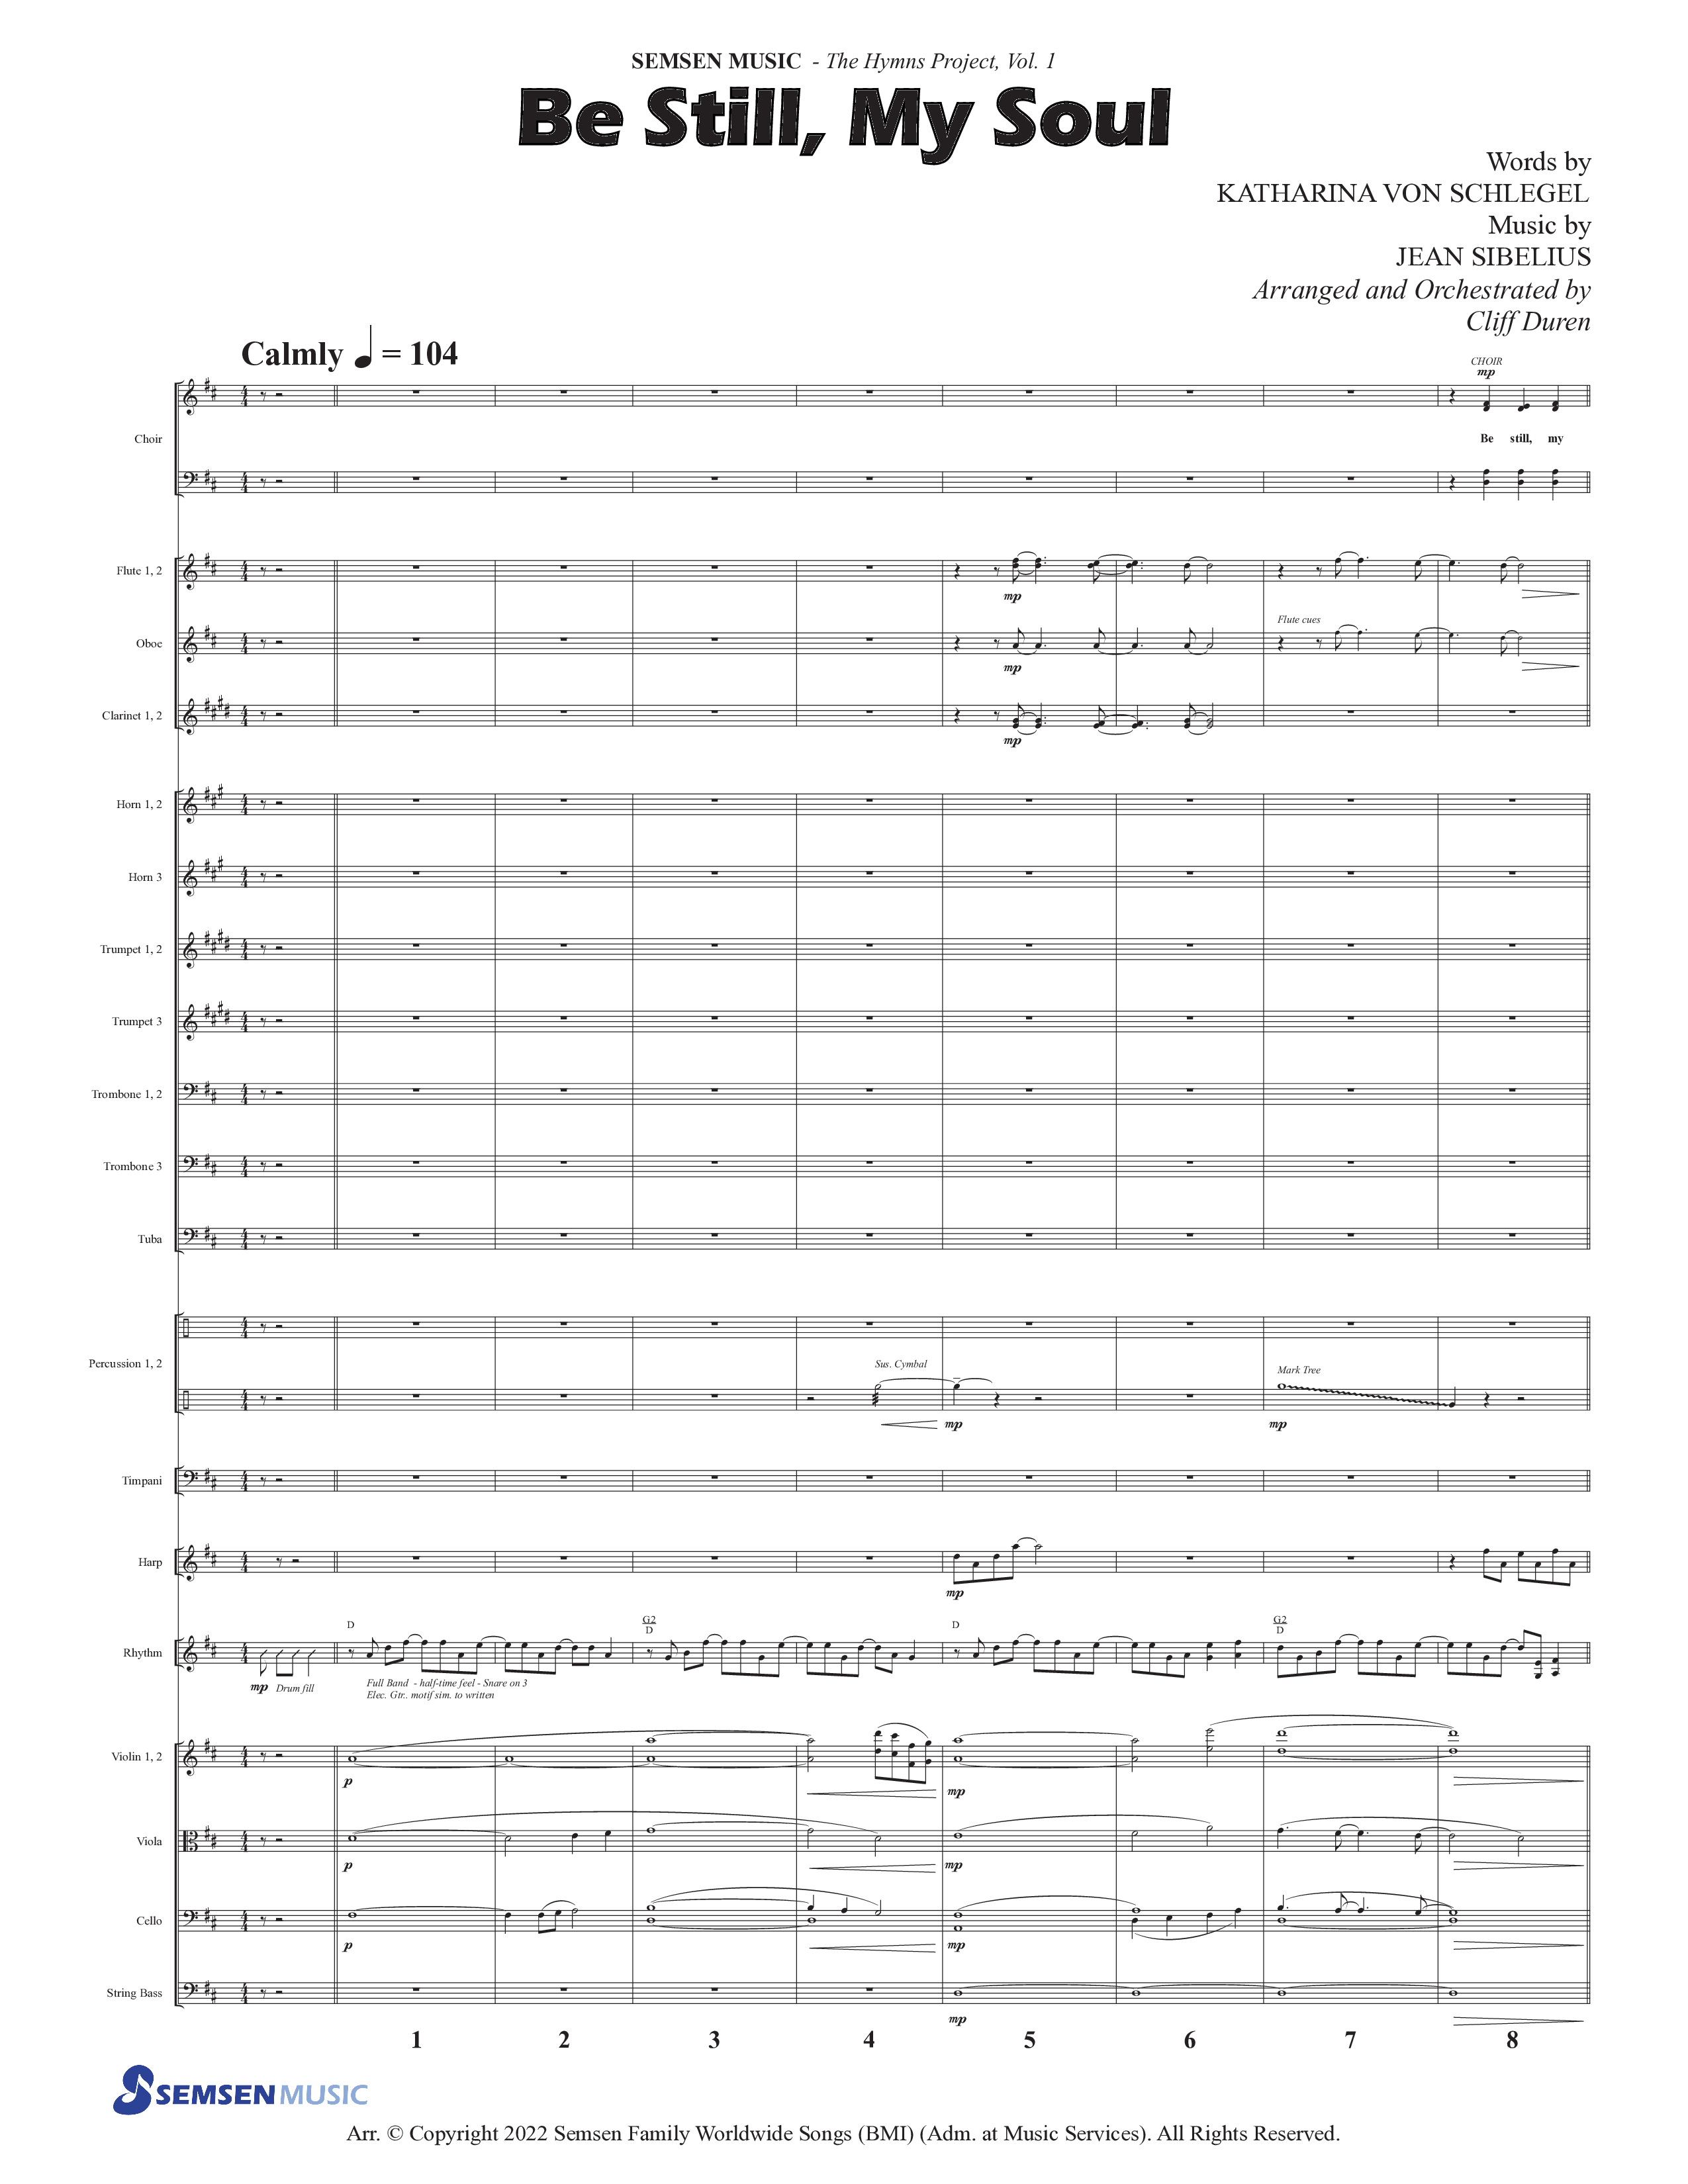 Be Still My Soul (Choral Anthem SATB) Orchestration (Semsen Music / Arr. Cliff Duren)